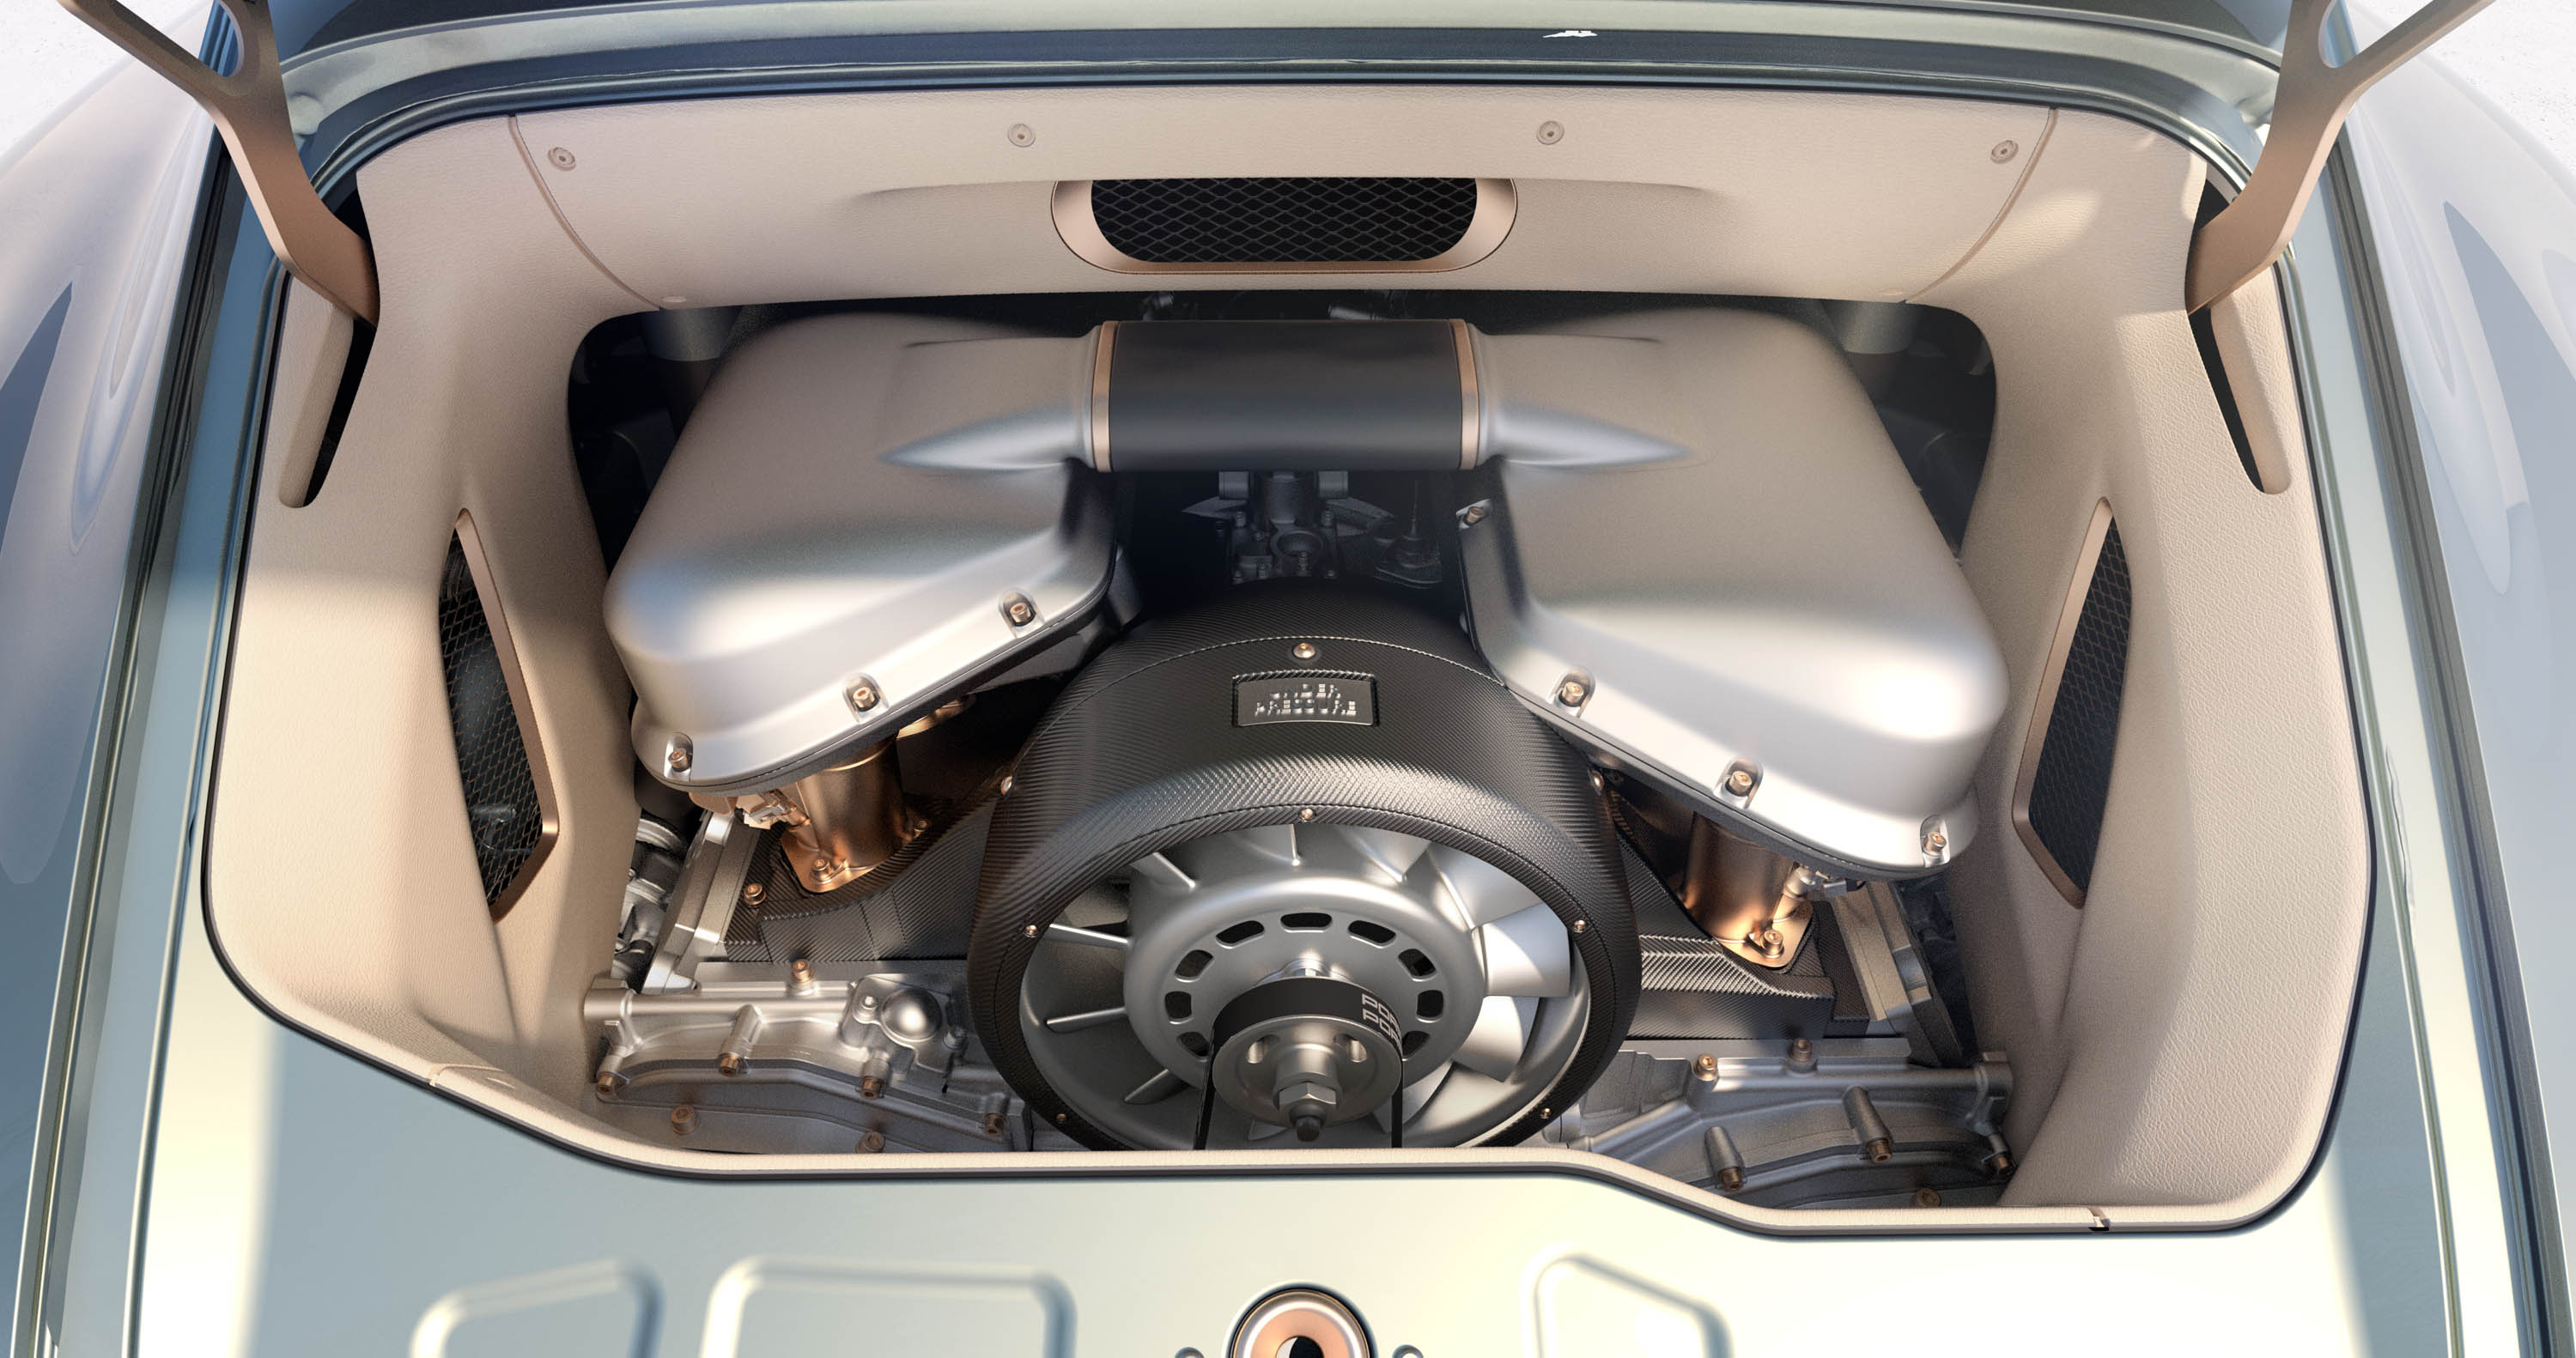 Porsche 911 Singer - Turbo Study